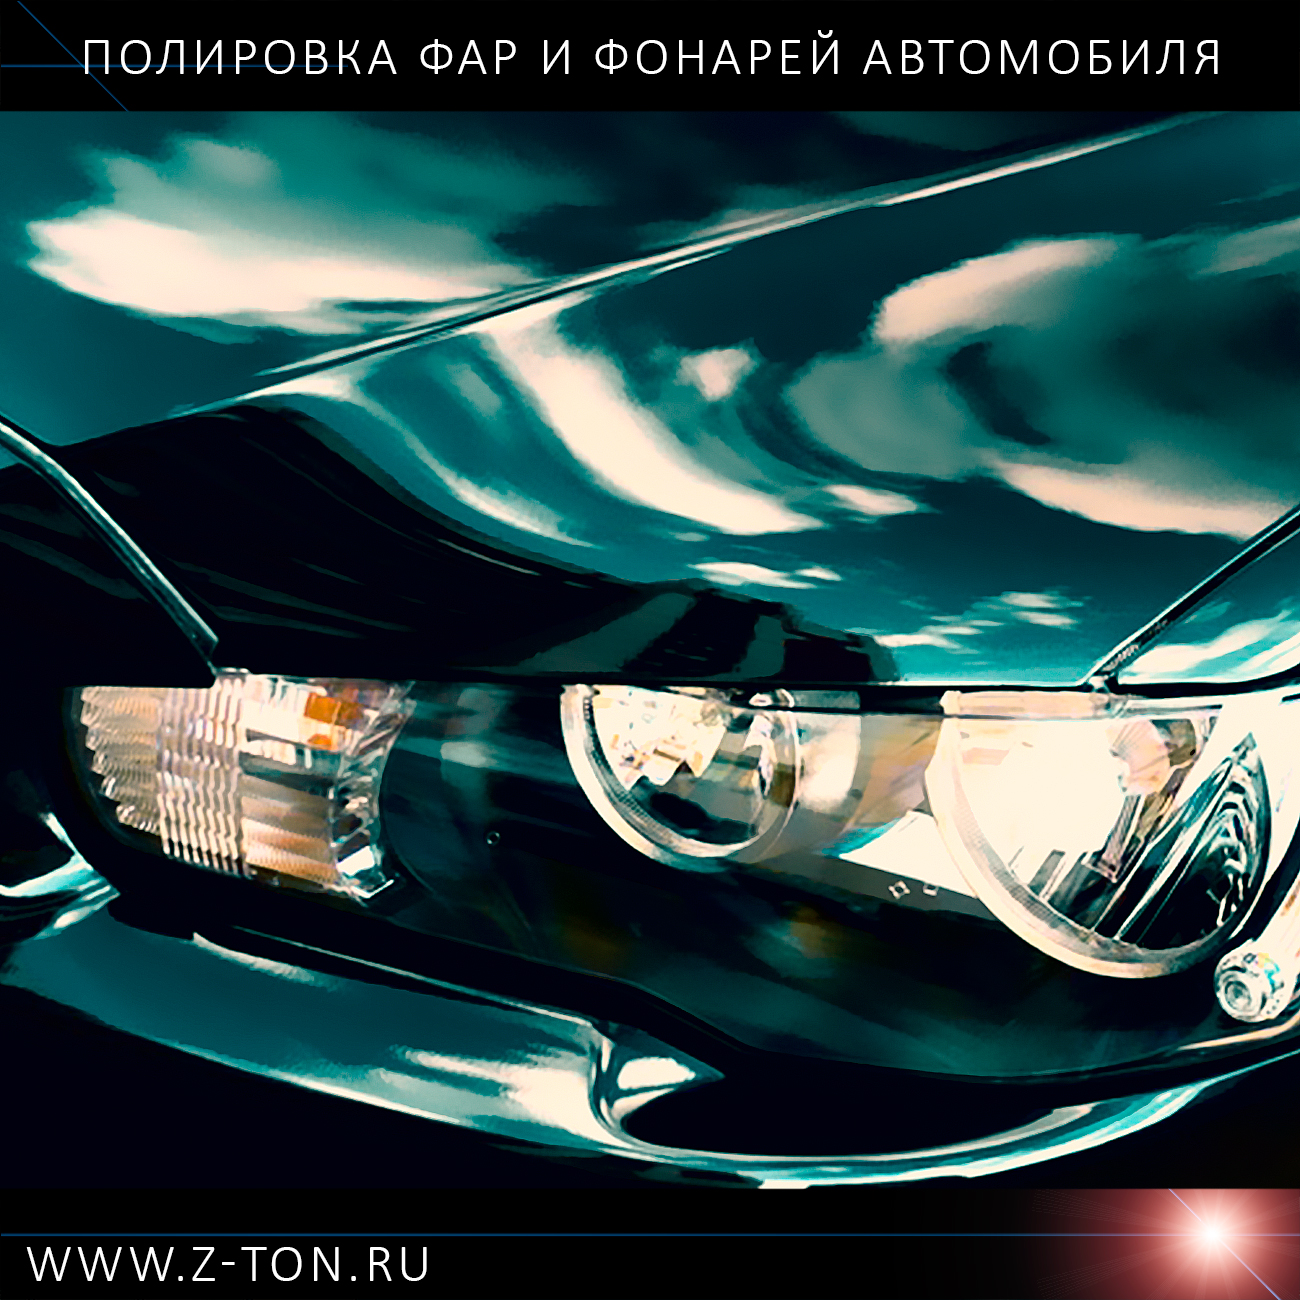 Полировка фар [фонарей] автомобиля в Зеленограде